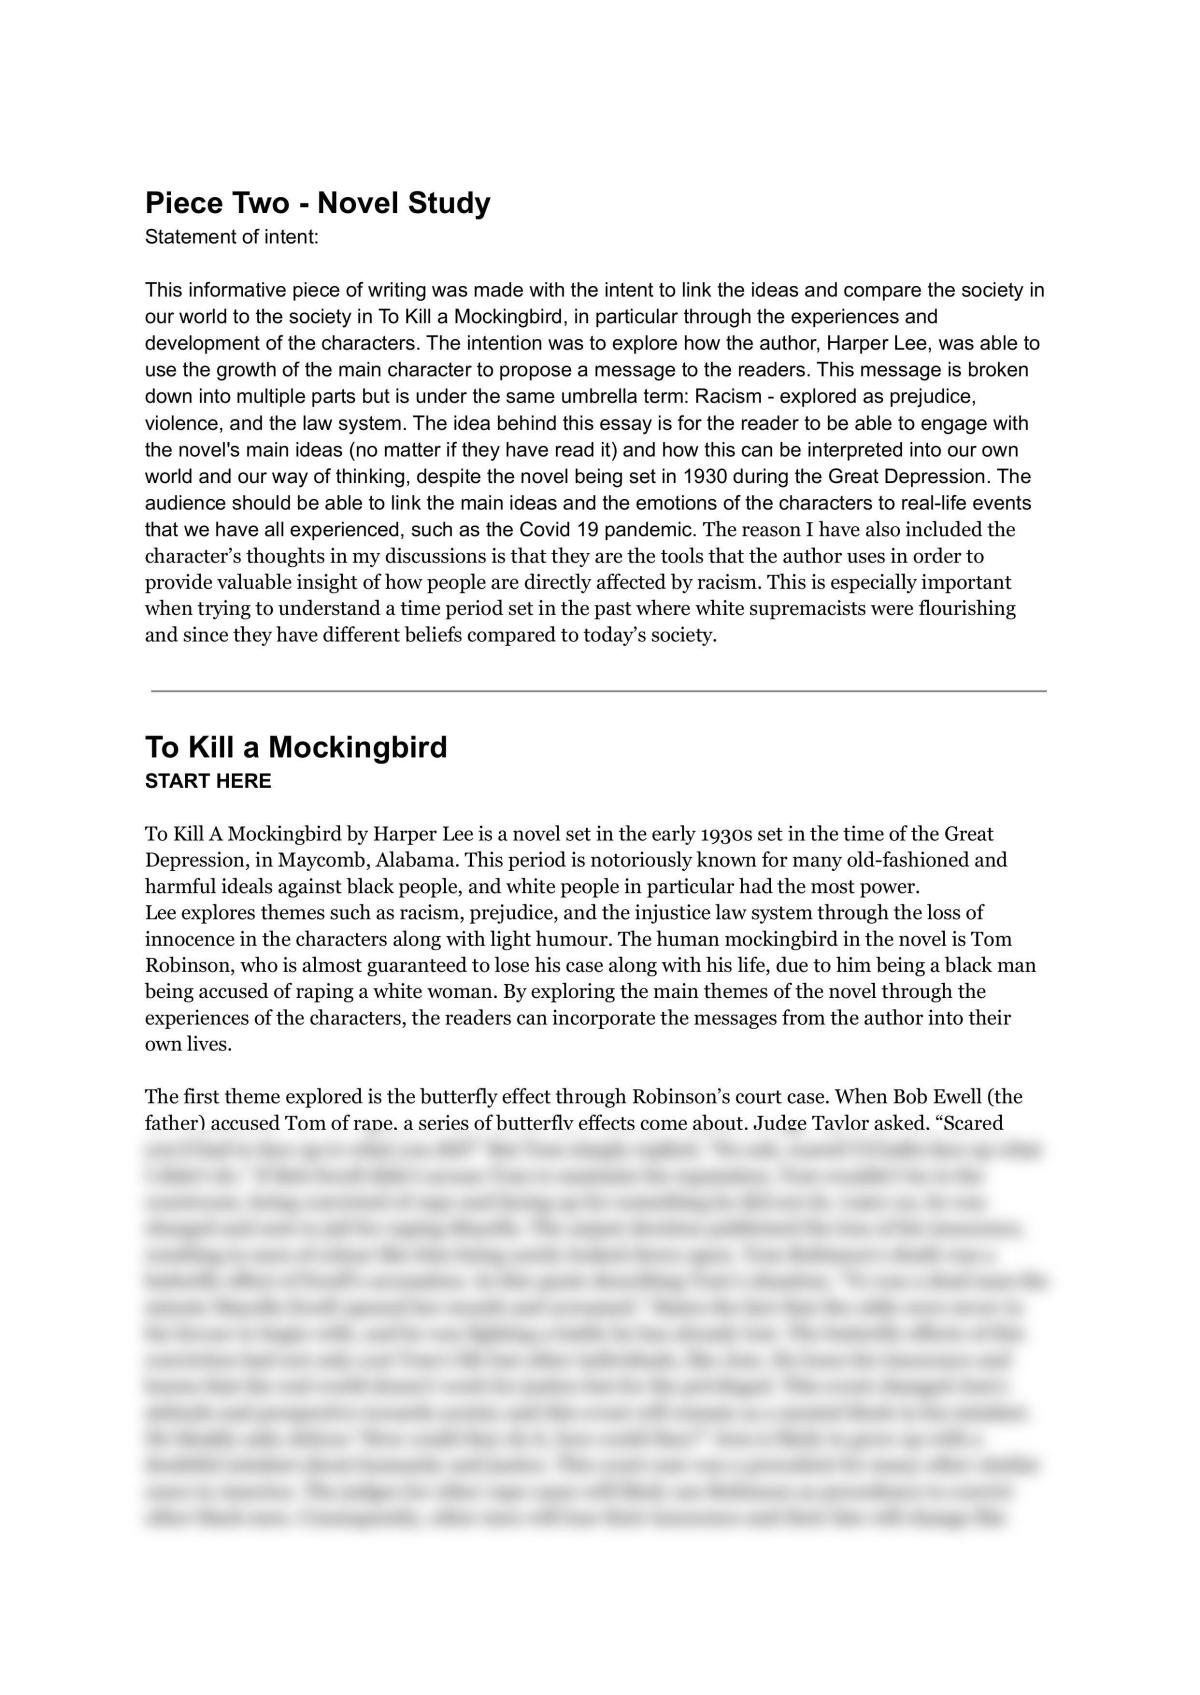 English Level 2 Portfolio Piece  - Page 1